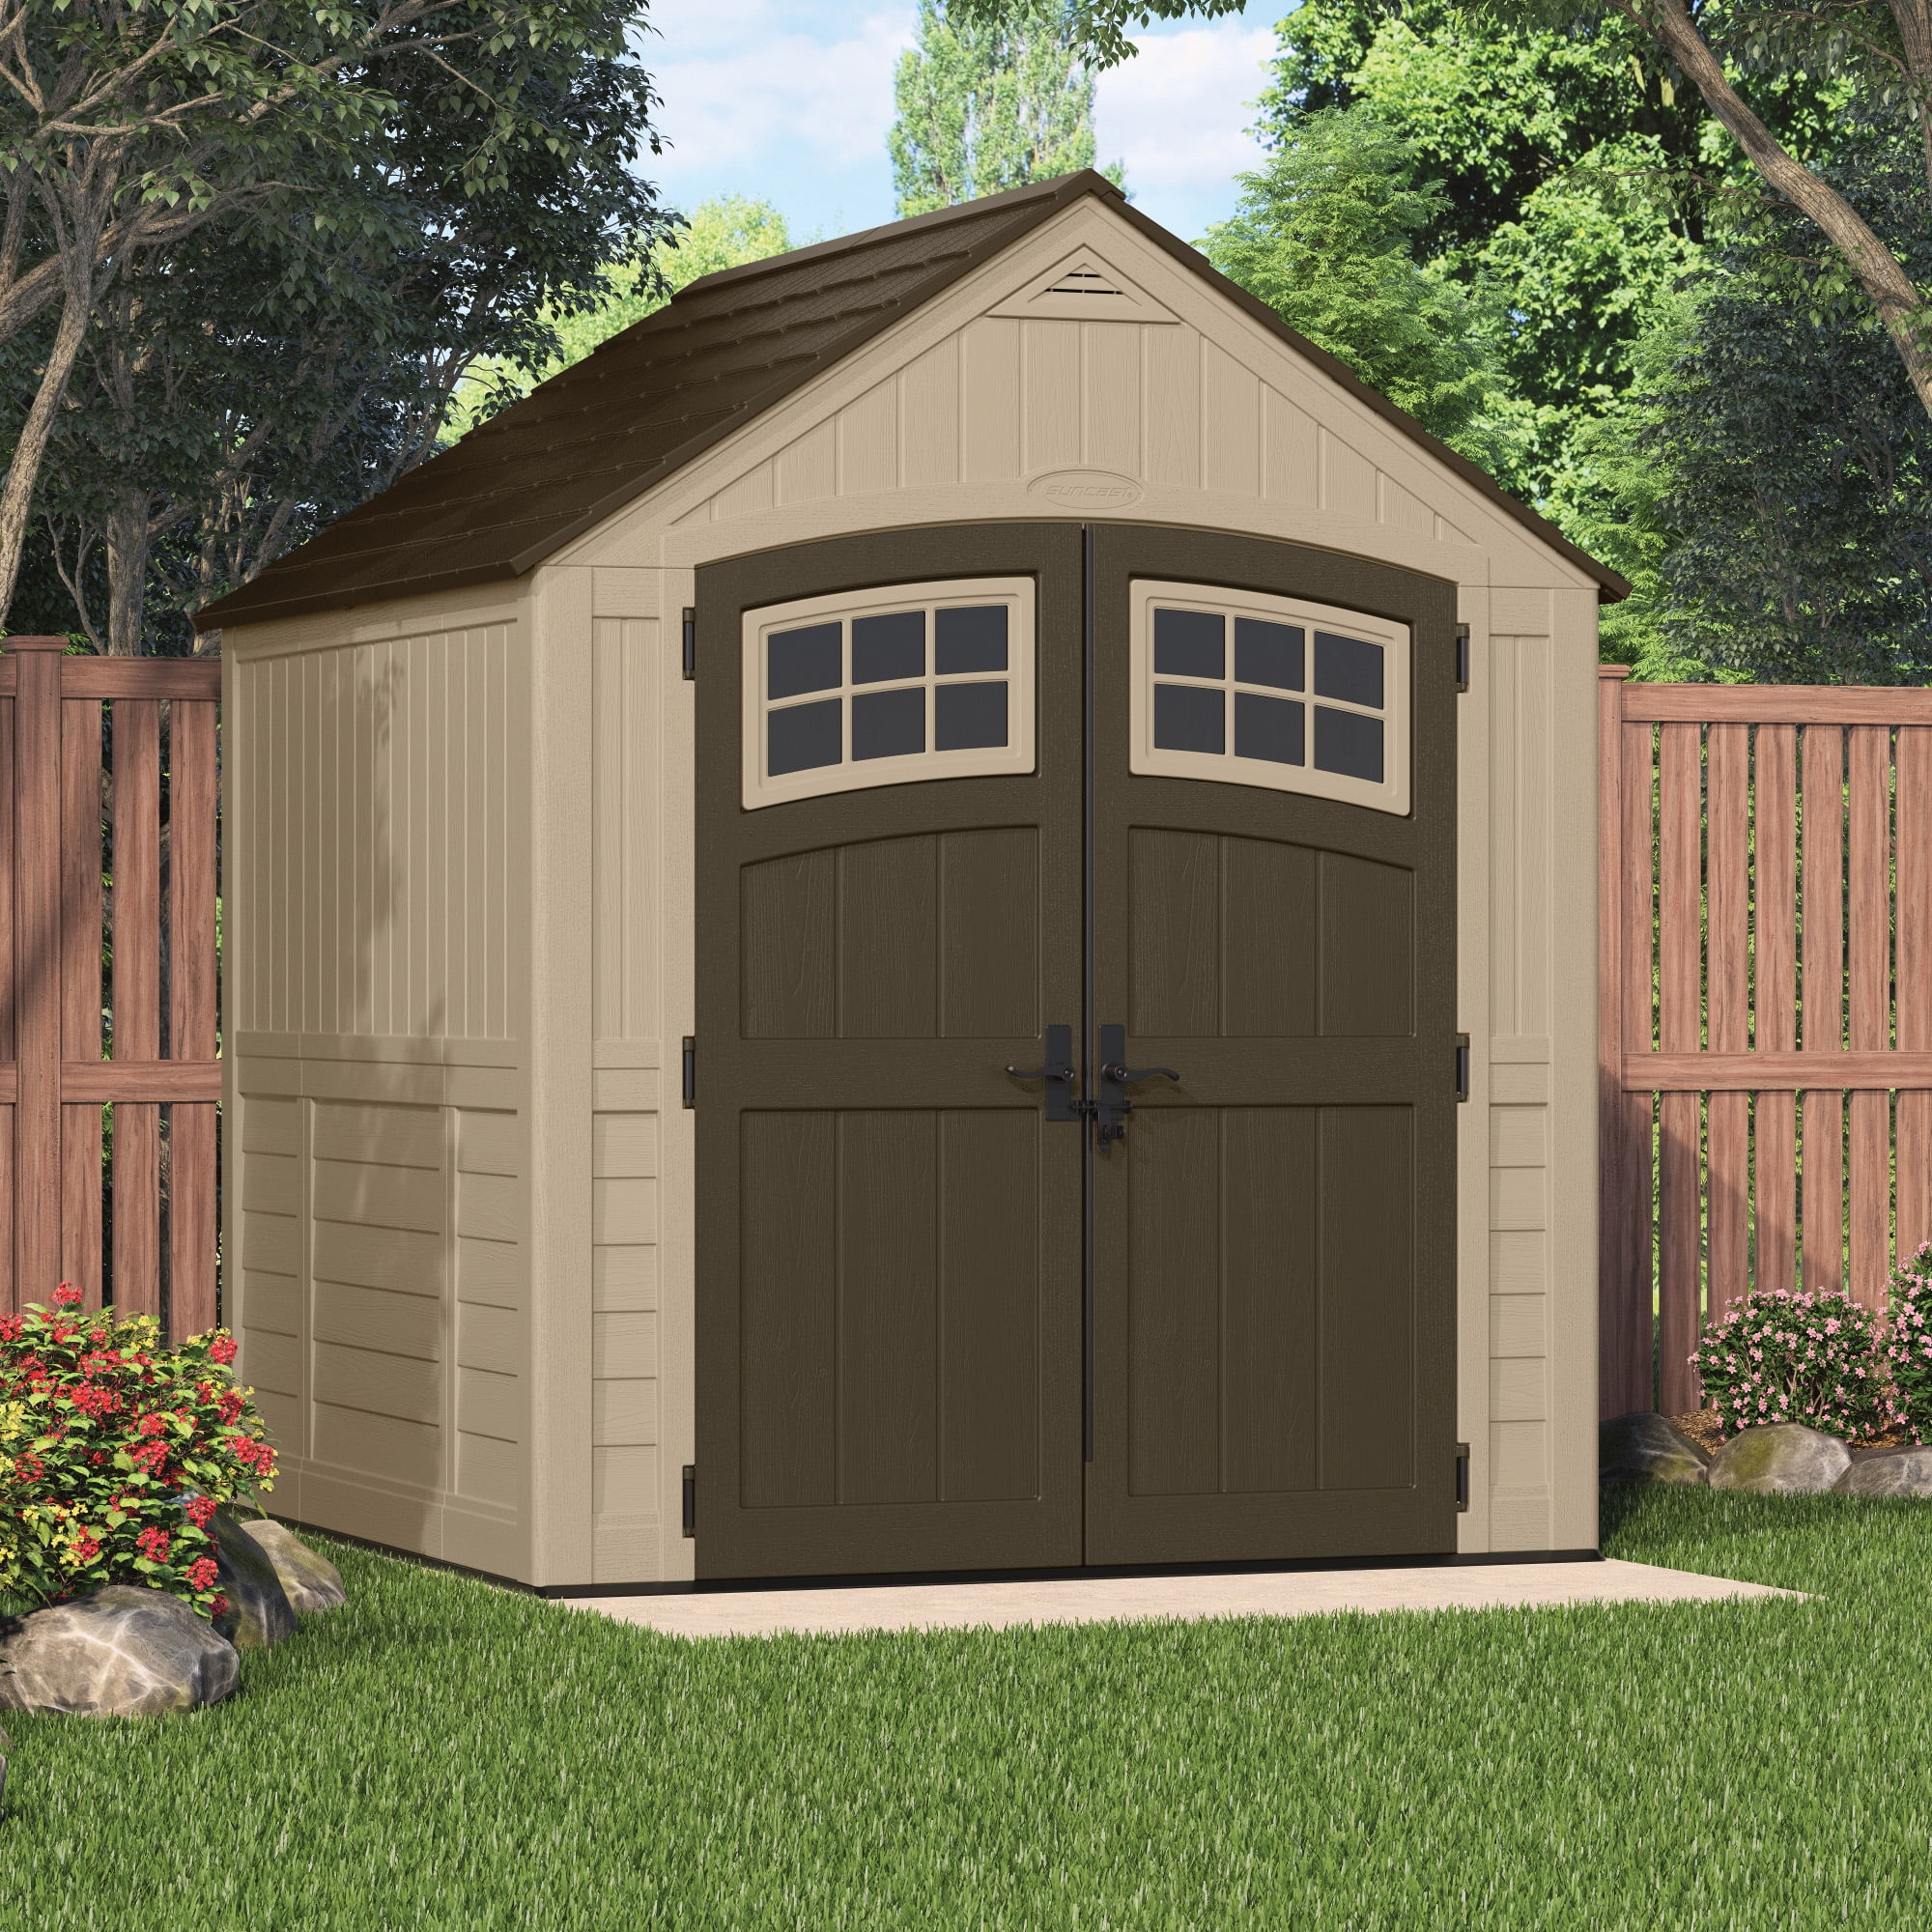 Suncast Sutton® Storage Shed for Backyard, Sand Brown, 7' x 7', 322 cu 